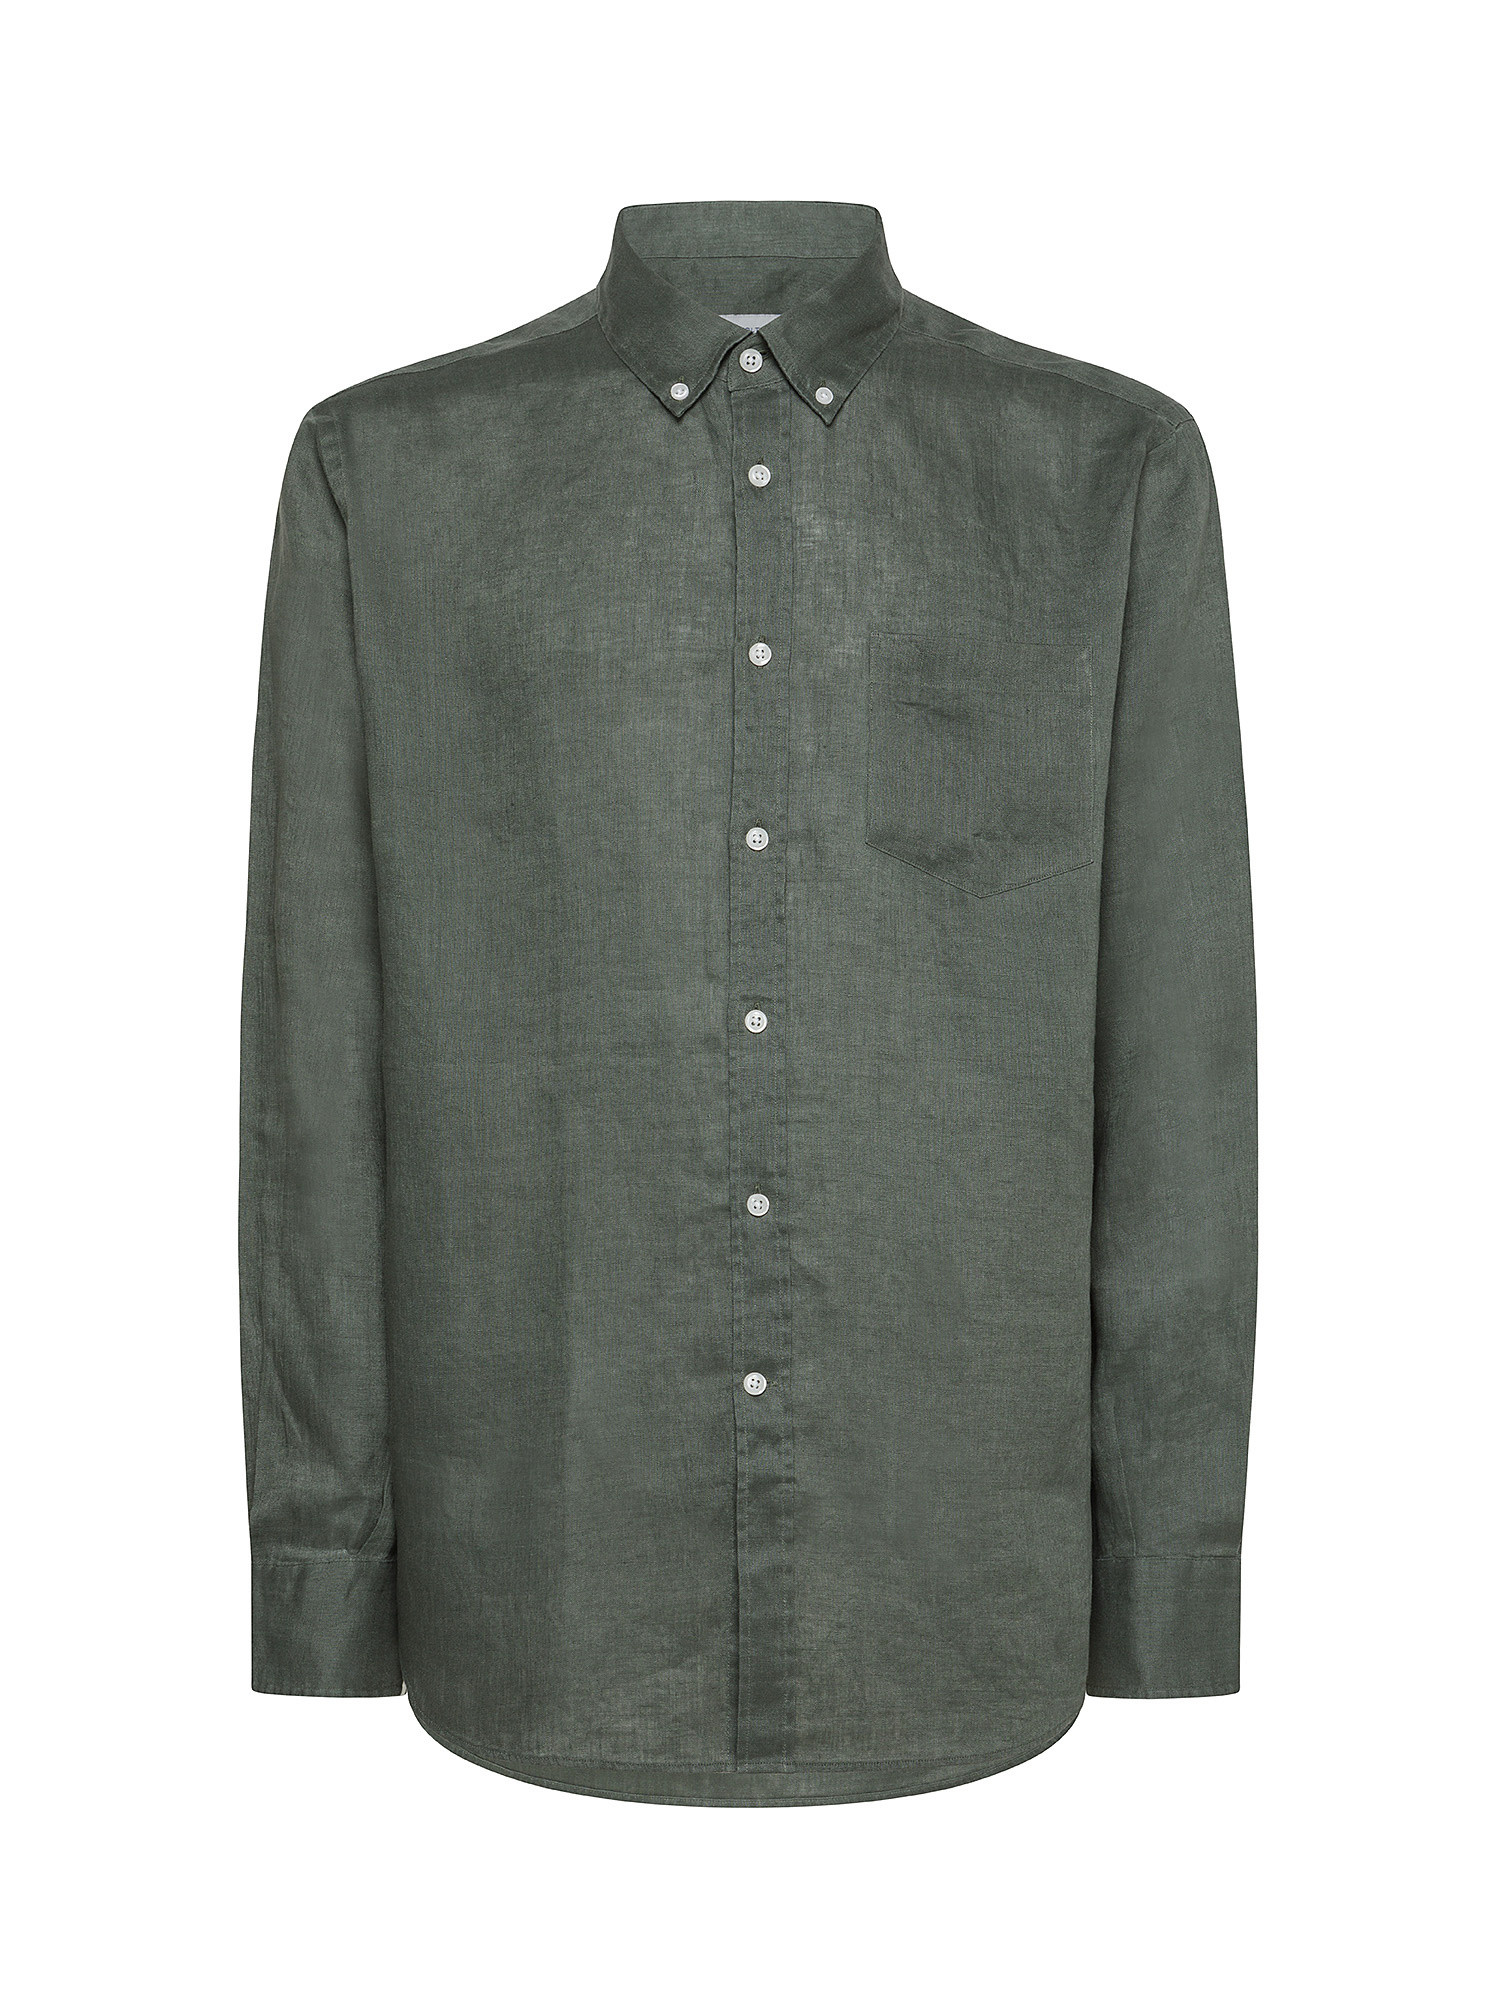 Luca D'Altieri - Regular fit shirt in pure linen, Sage Green, large image number 0